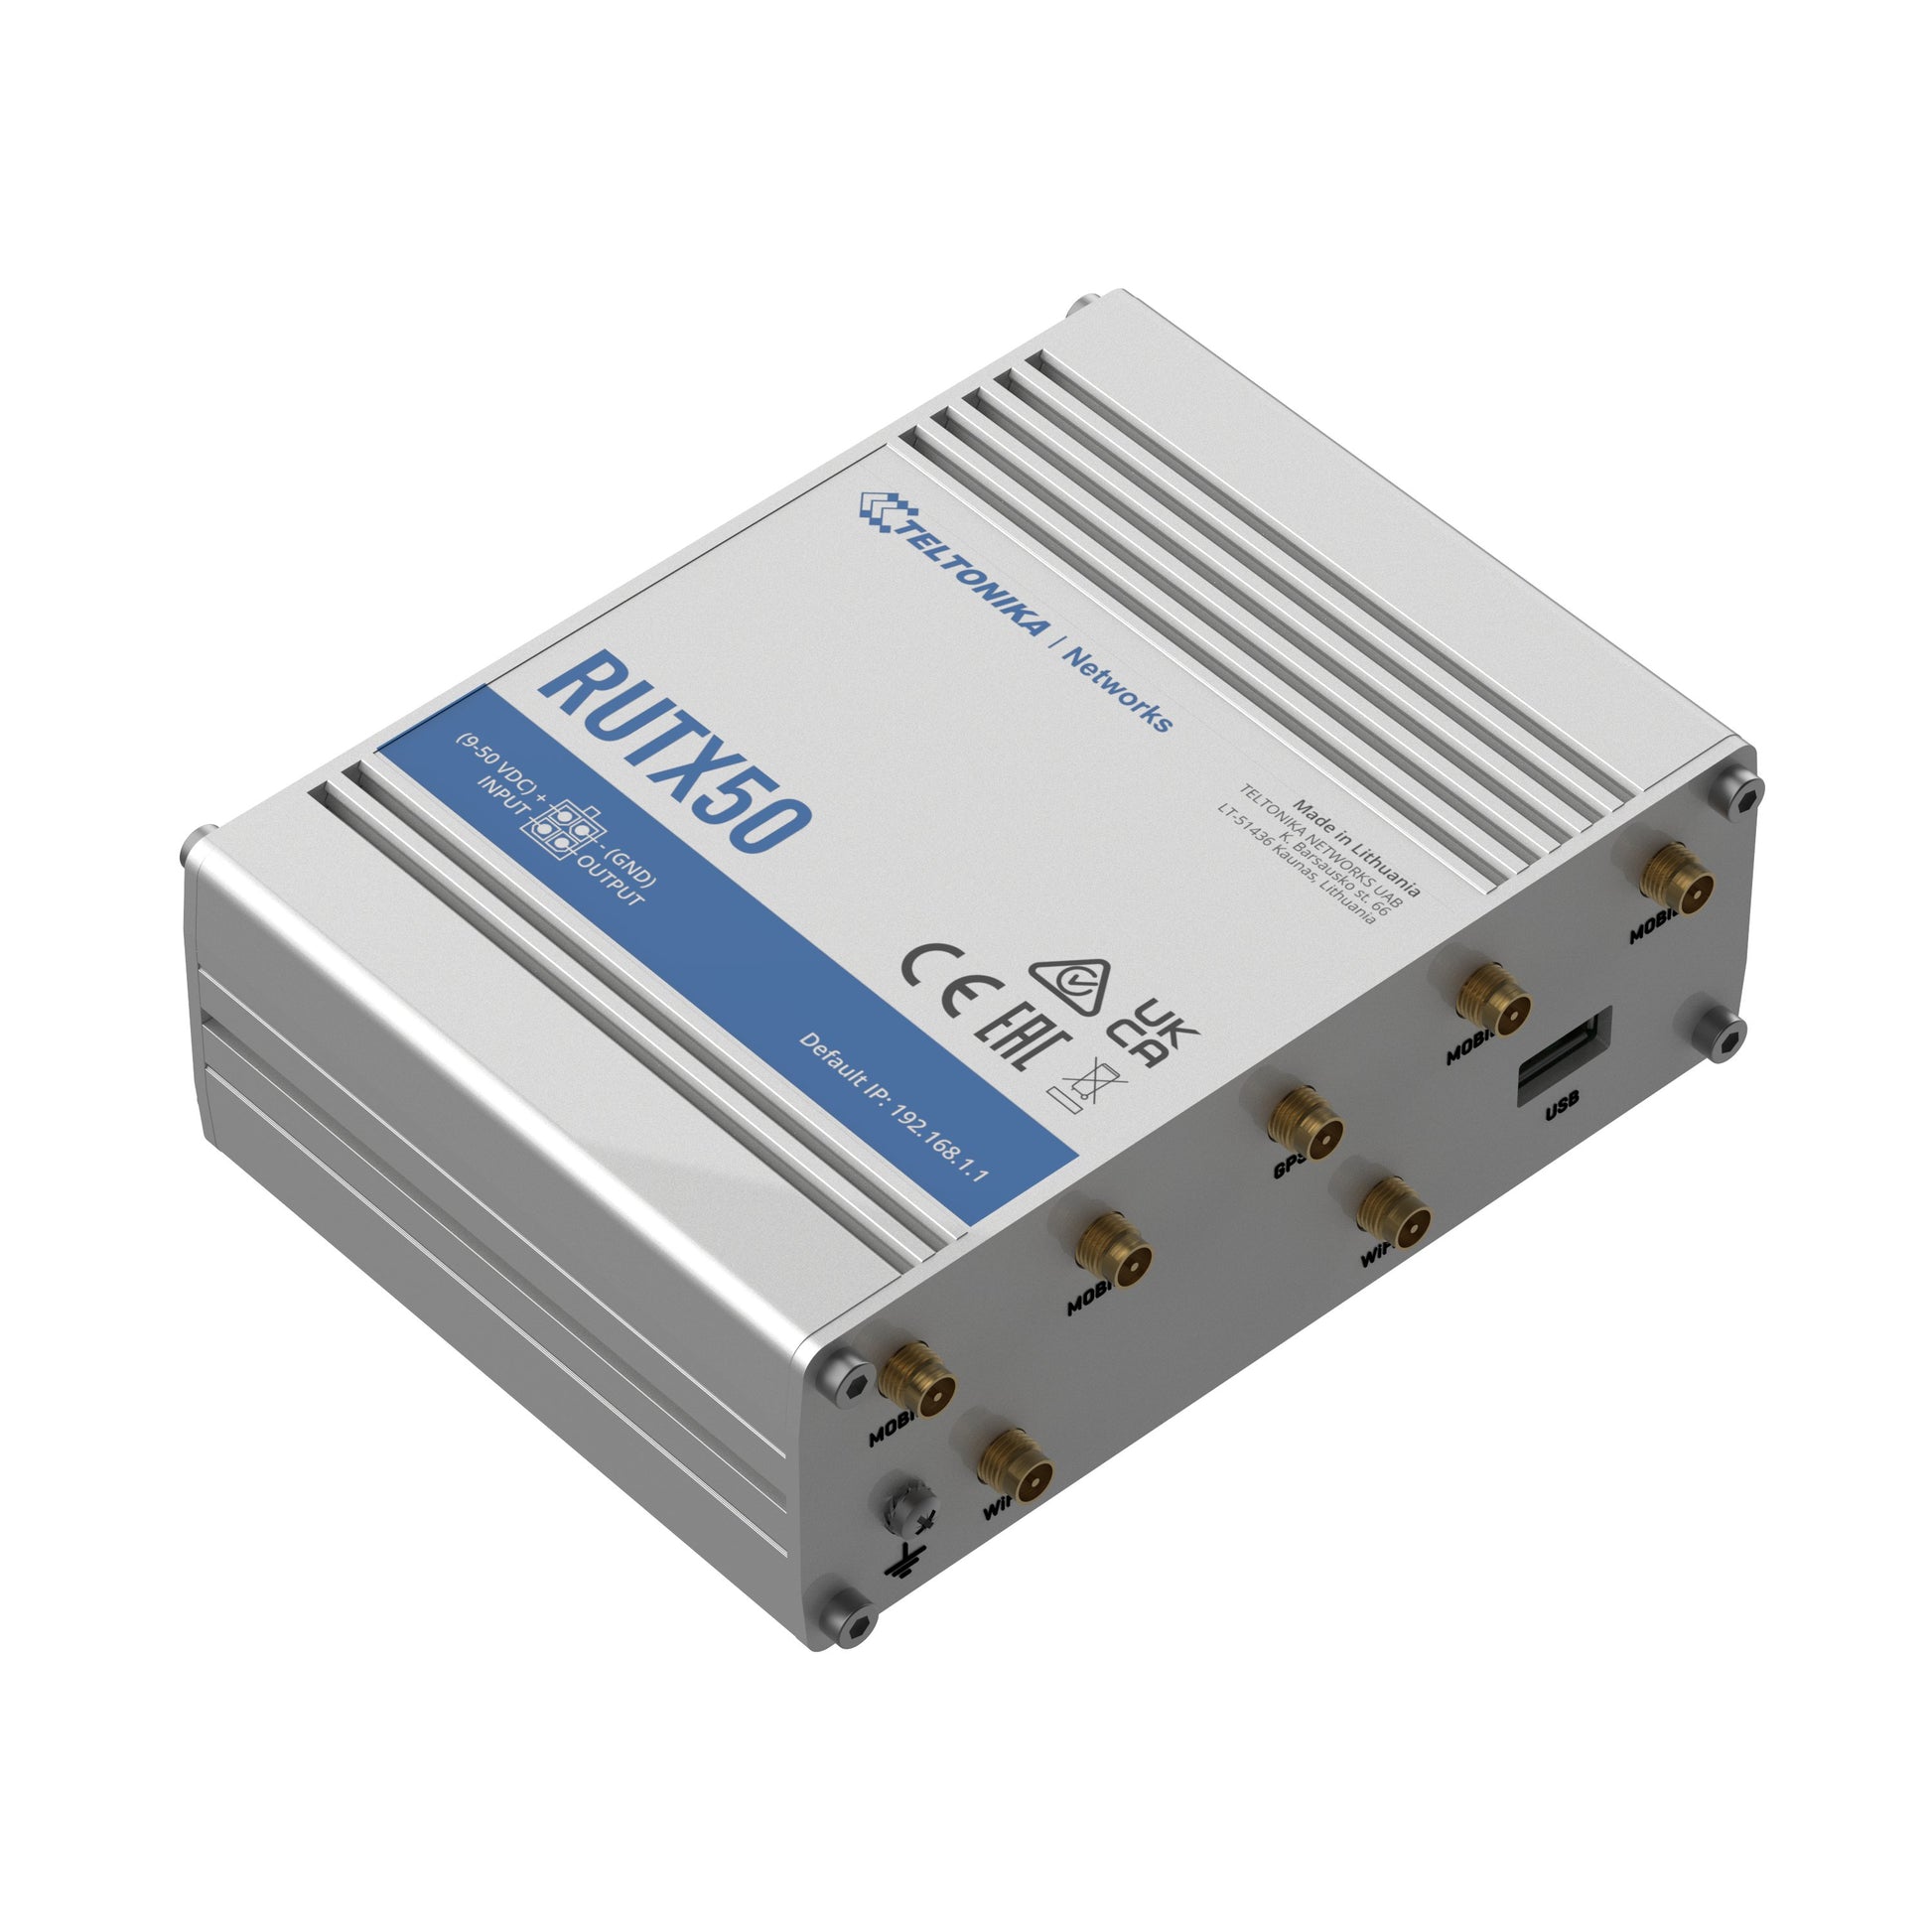 Teltonika RUTX50 - Industrial 5G Router Global - Blue Wireless Store